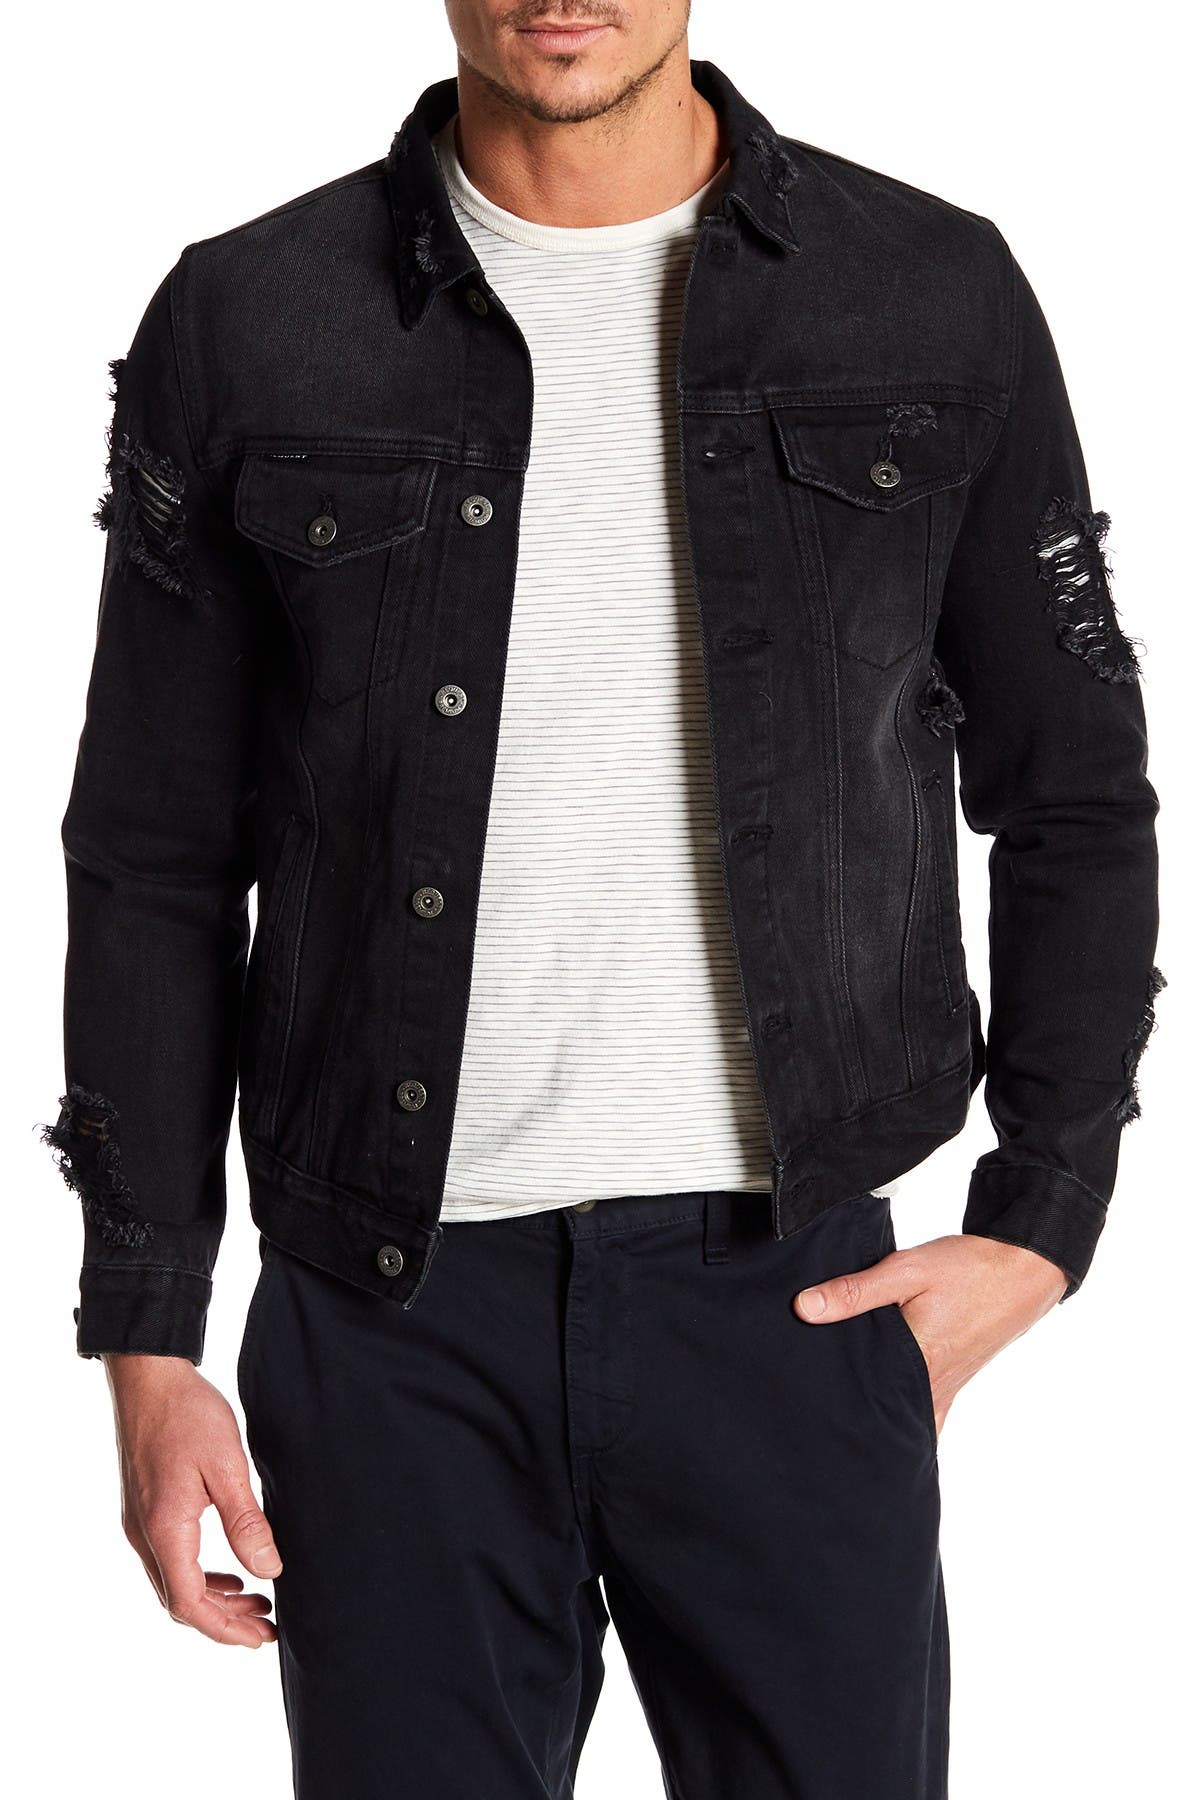 black fur jean jacket mens